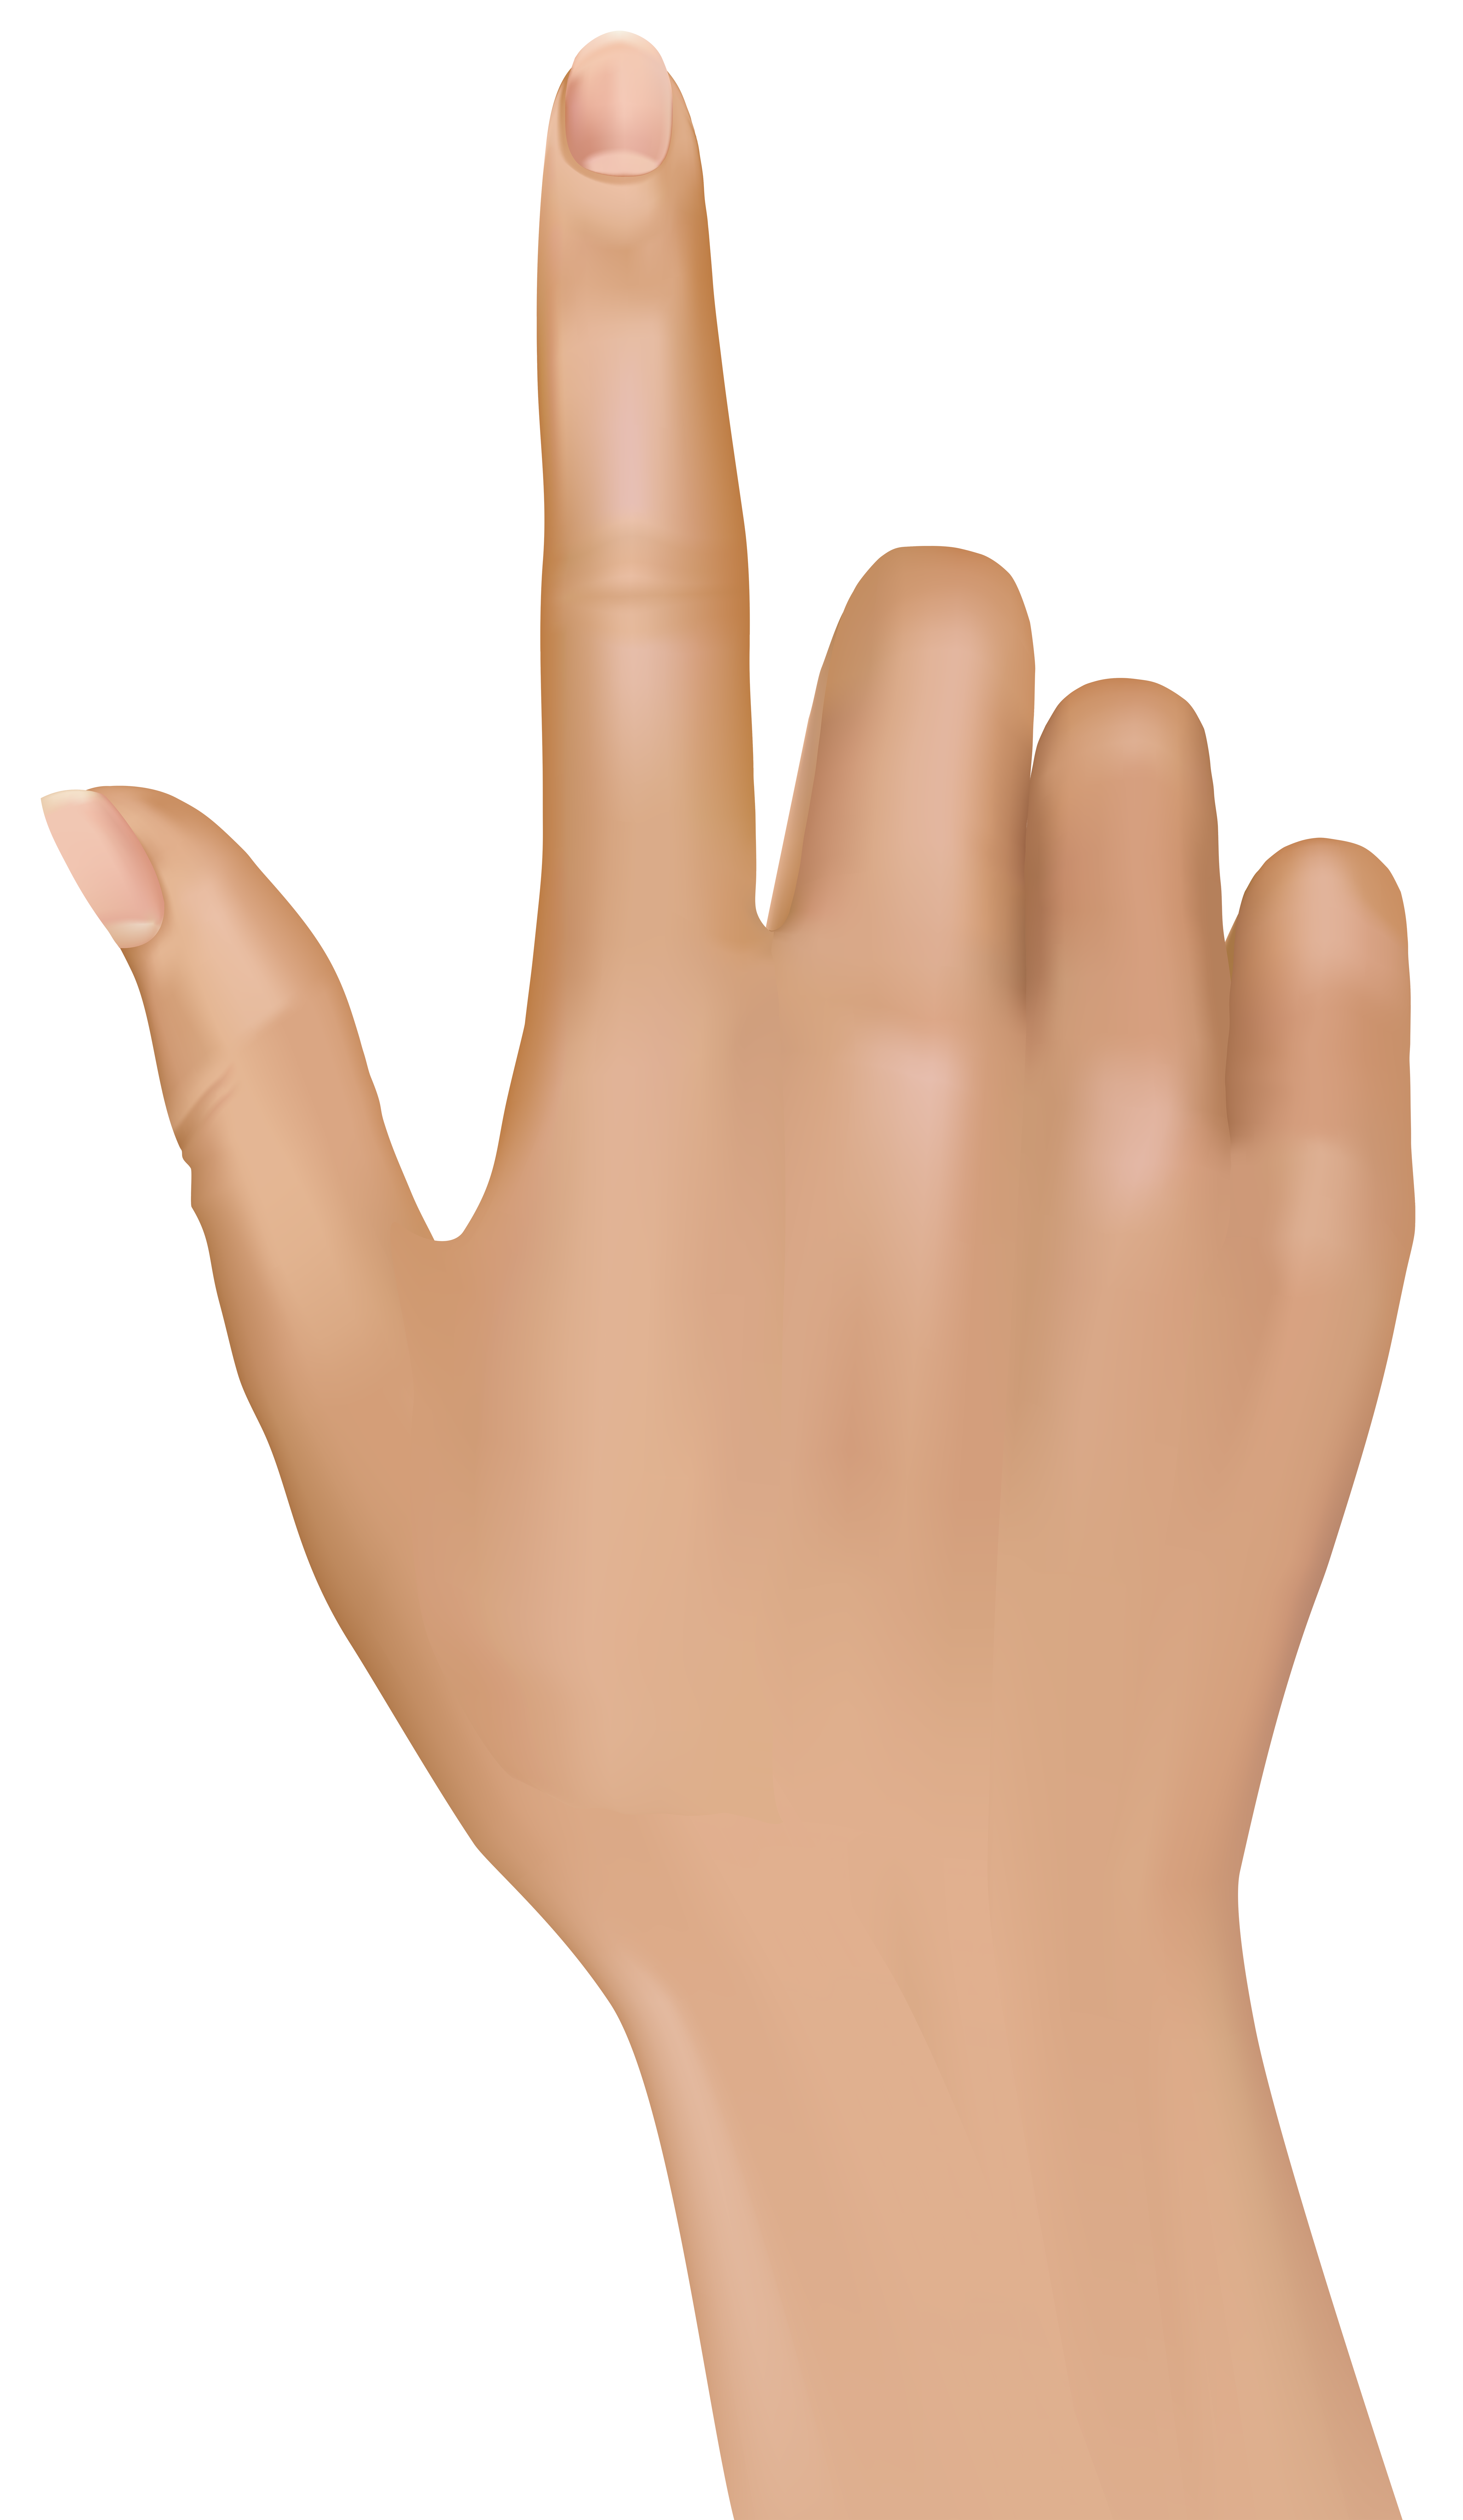 Finger at getdrawings com. Clipart sun hand